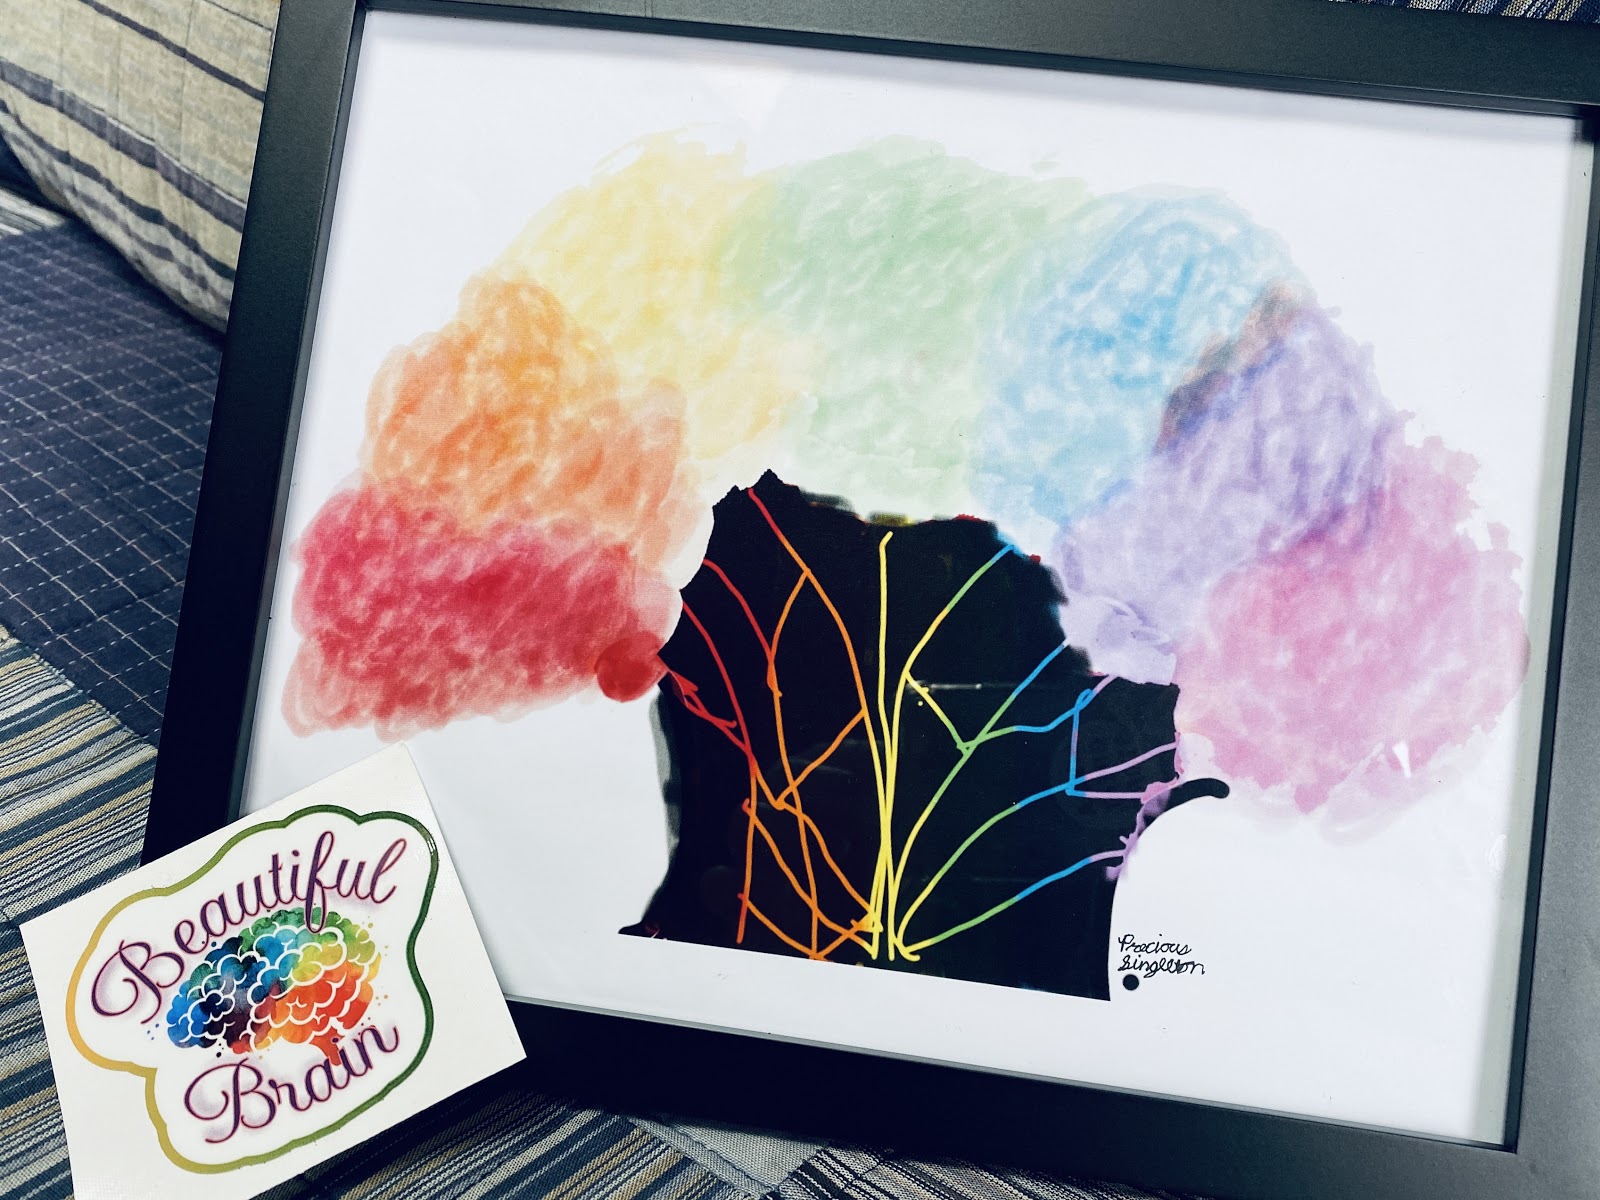 Precious's artwork of colorful tree